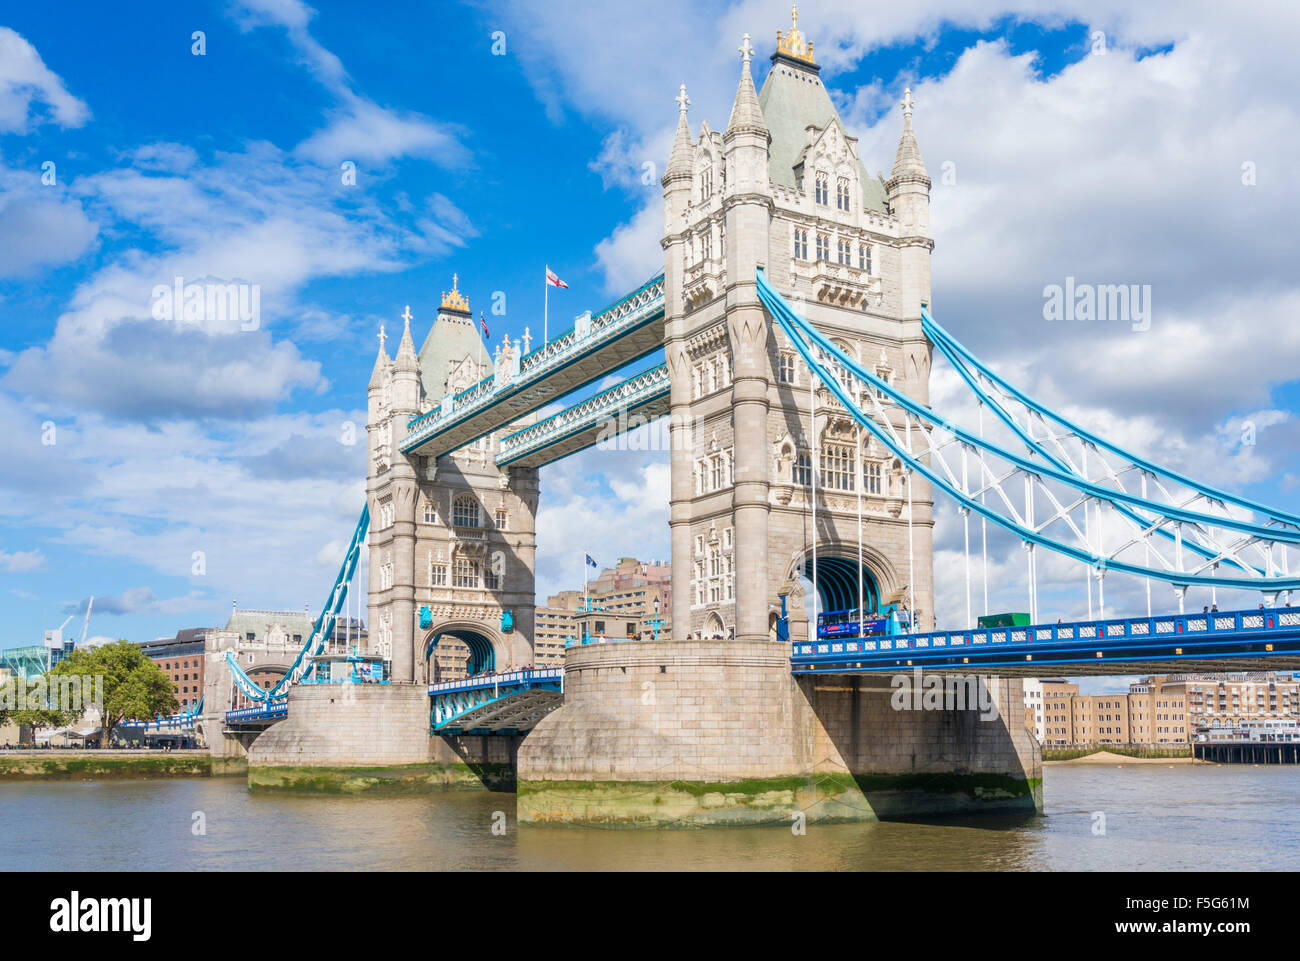 London Tower Bridge and River Thames City of London England GB UK Europe Stock Photo